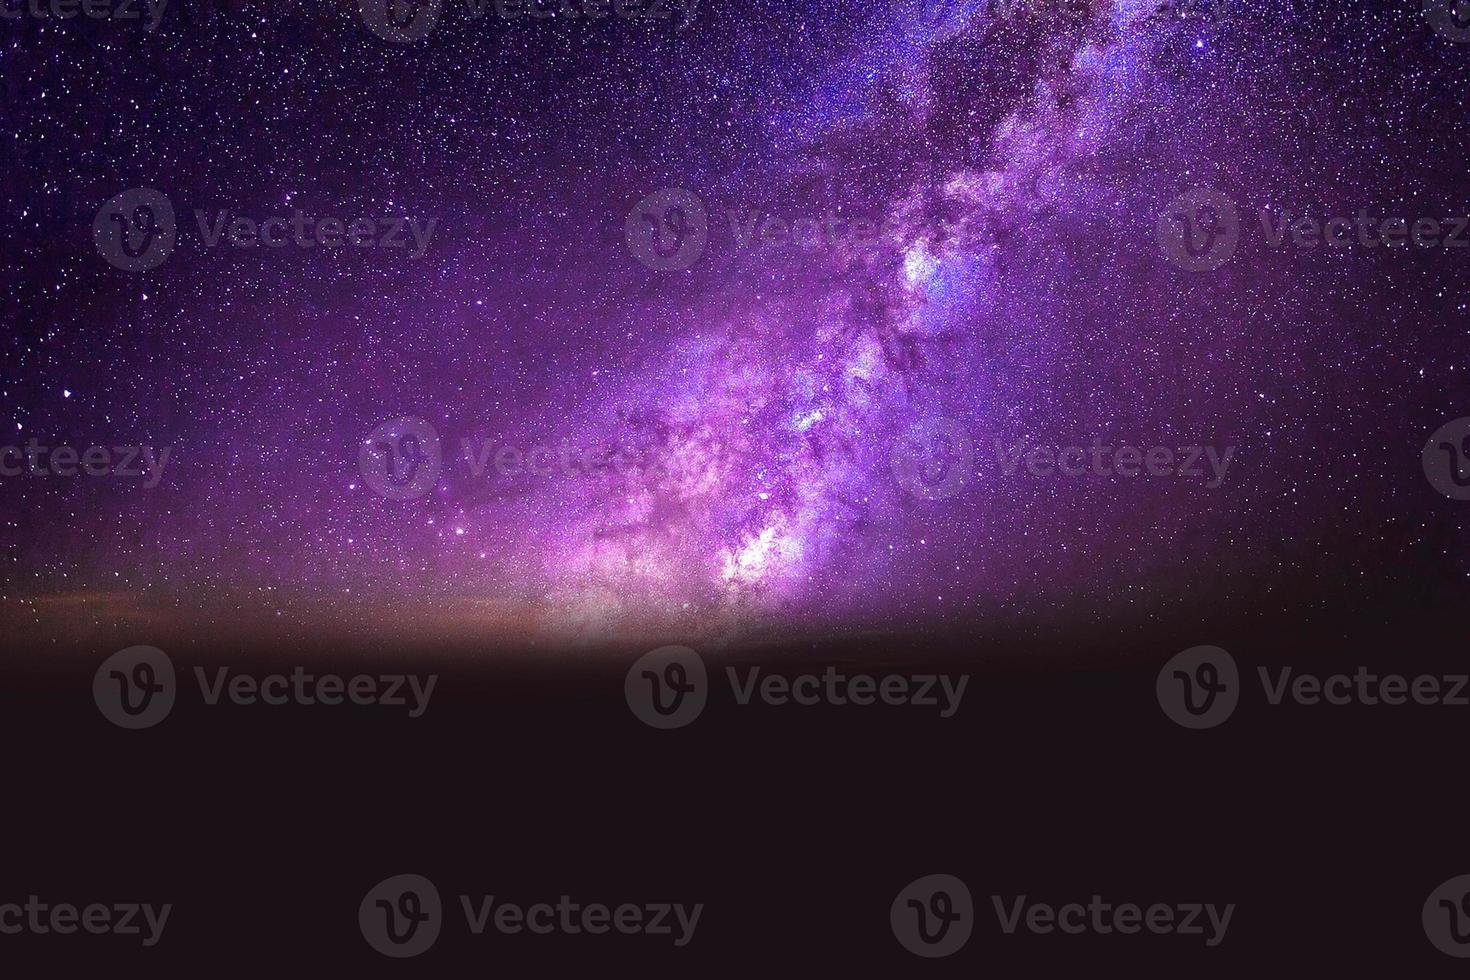 purple dramatic galaxy night panorama from the moon universe space on night sky photo